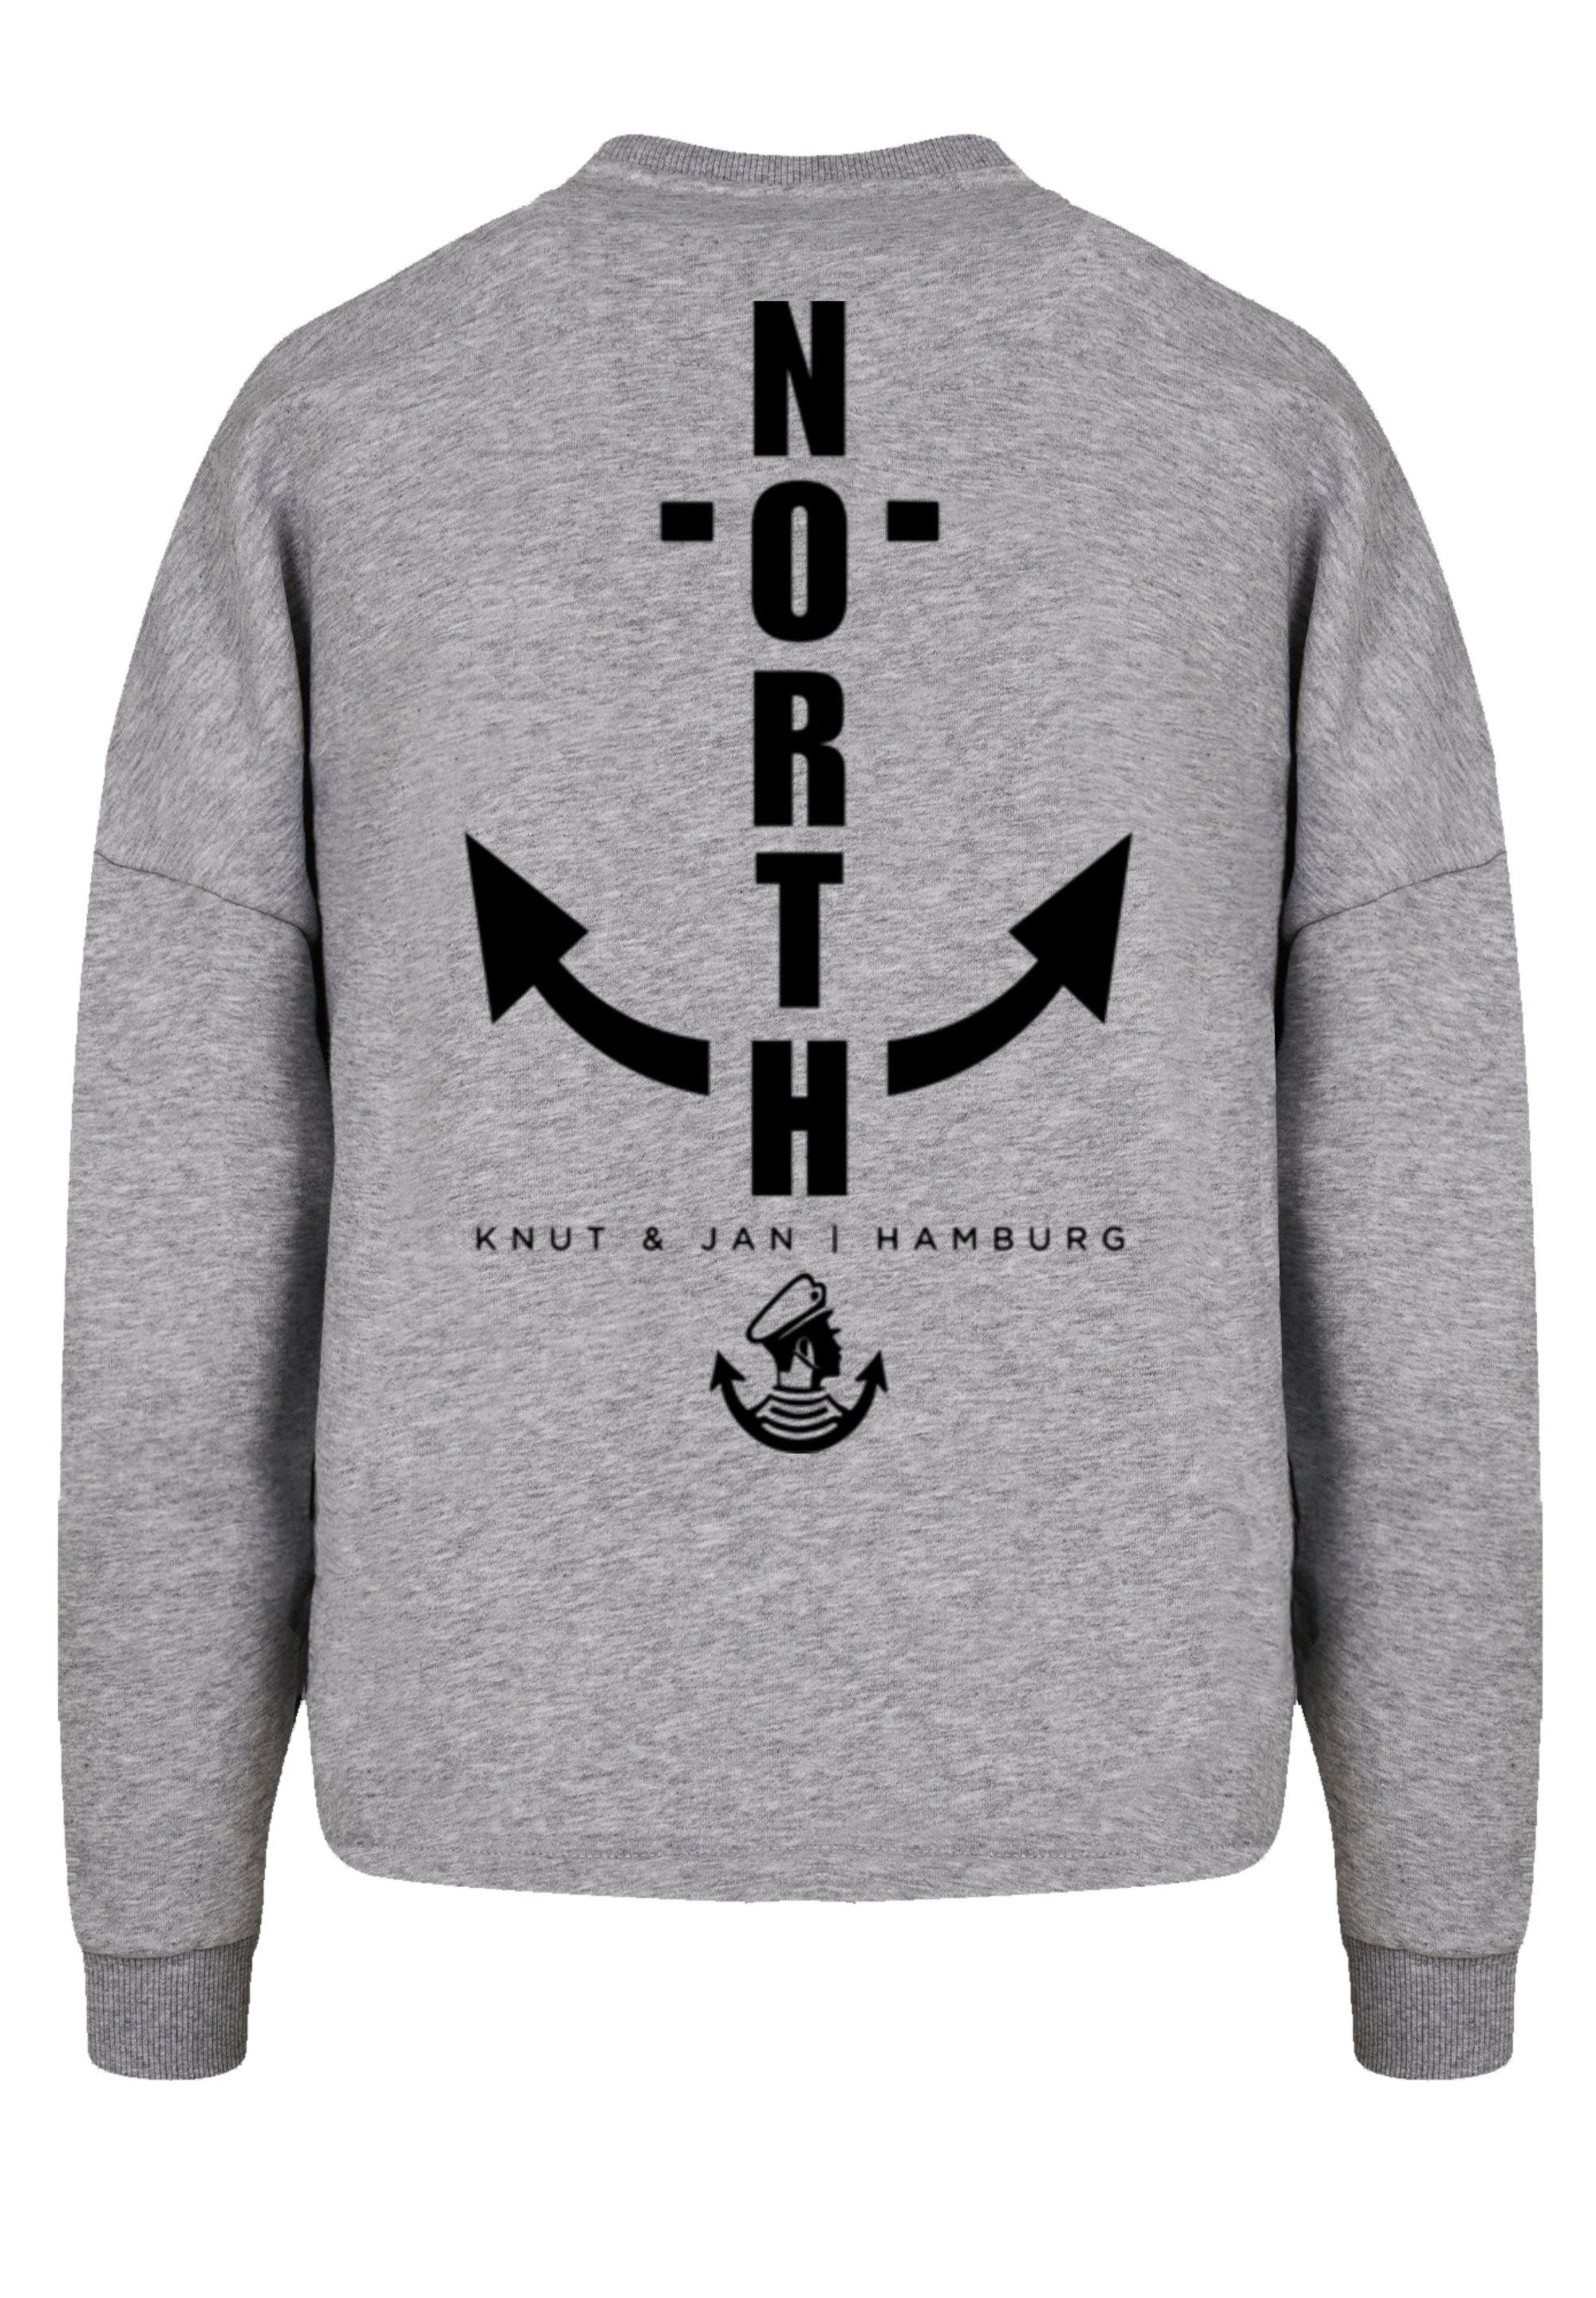 & Print North Sweatshirt Anchor heather Knut Hamburg Jan F4NT4STIC grey